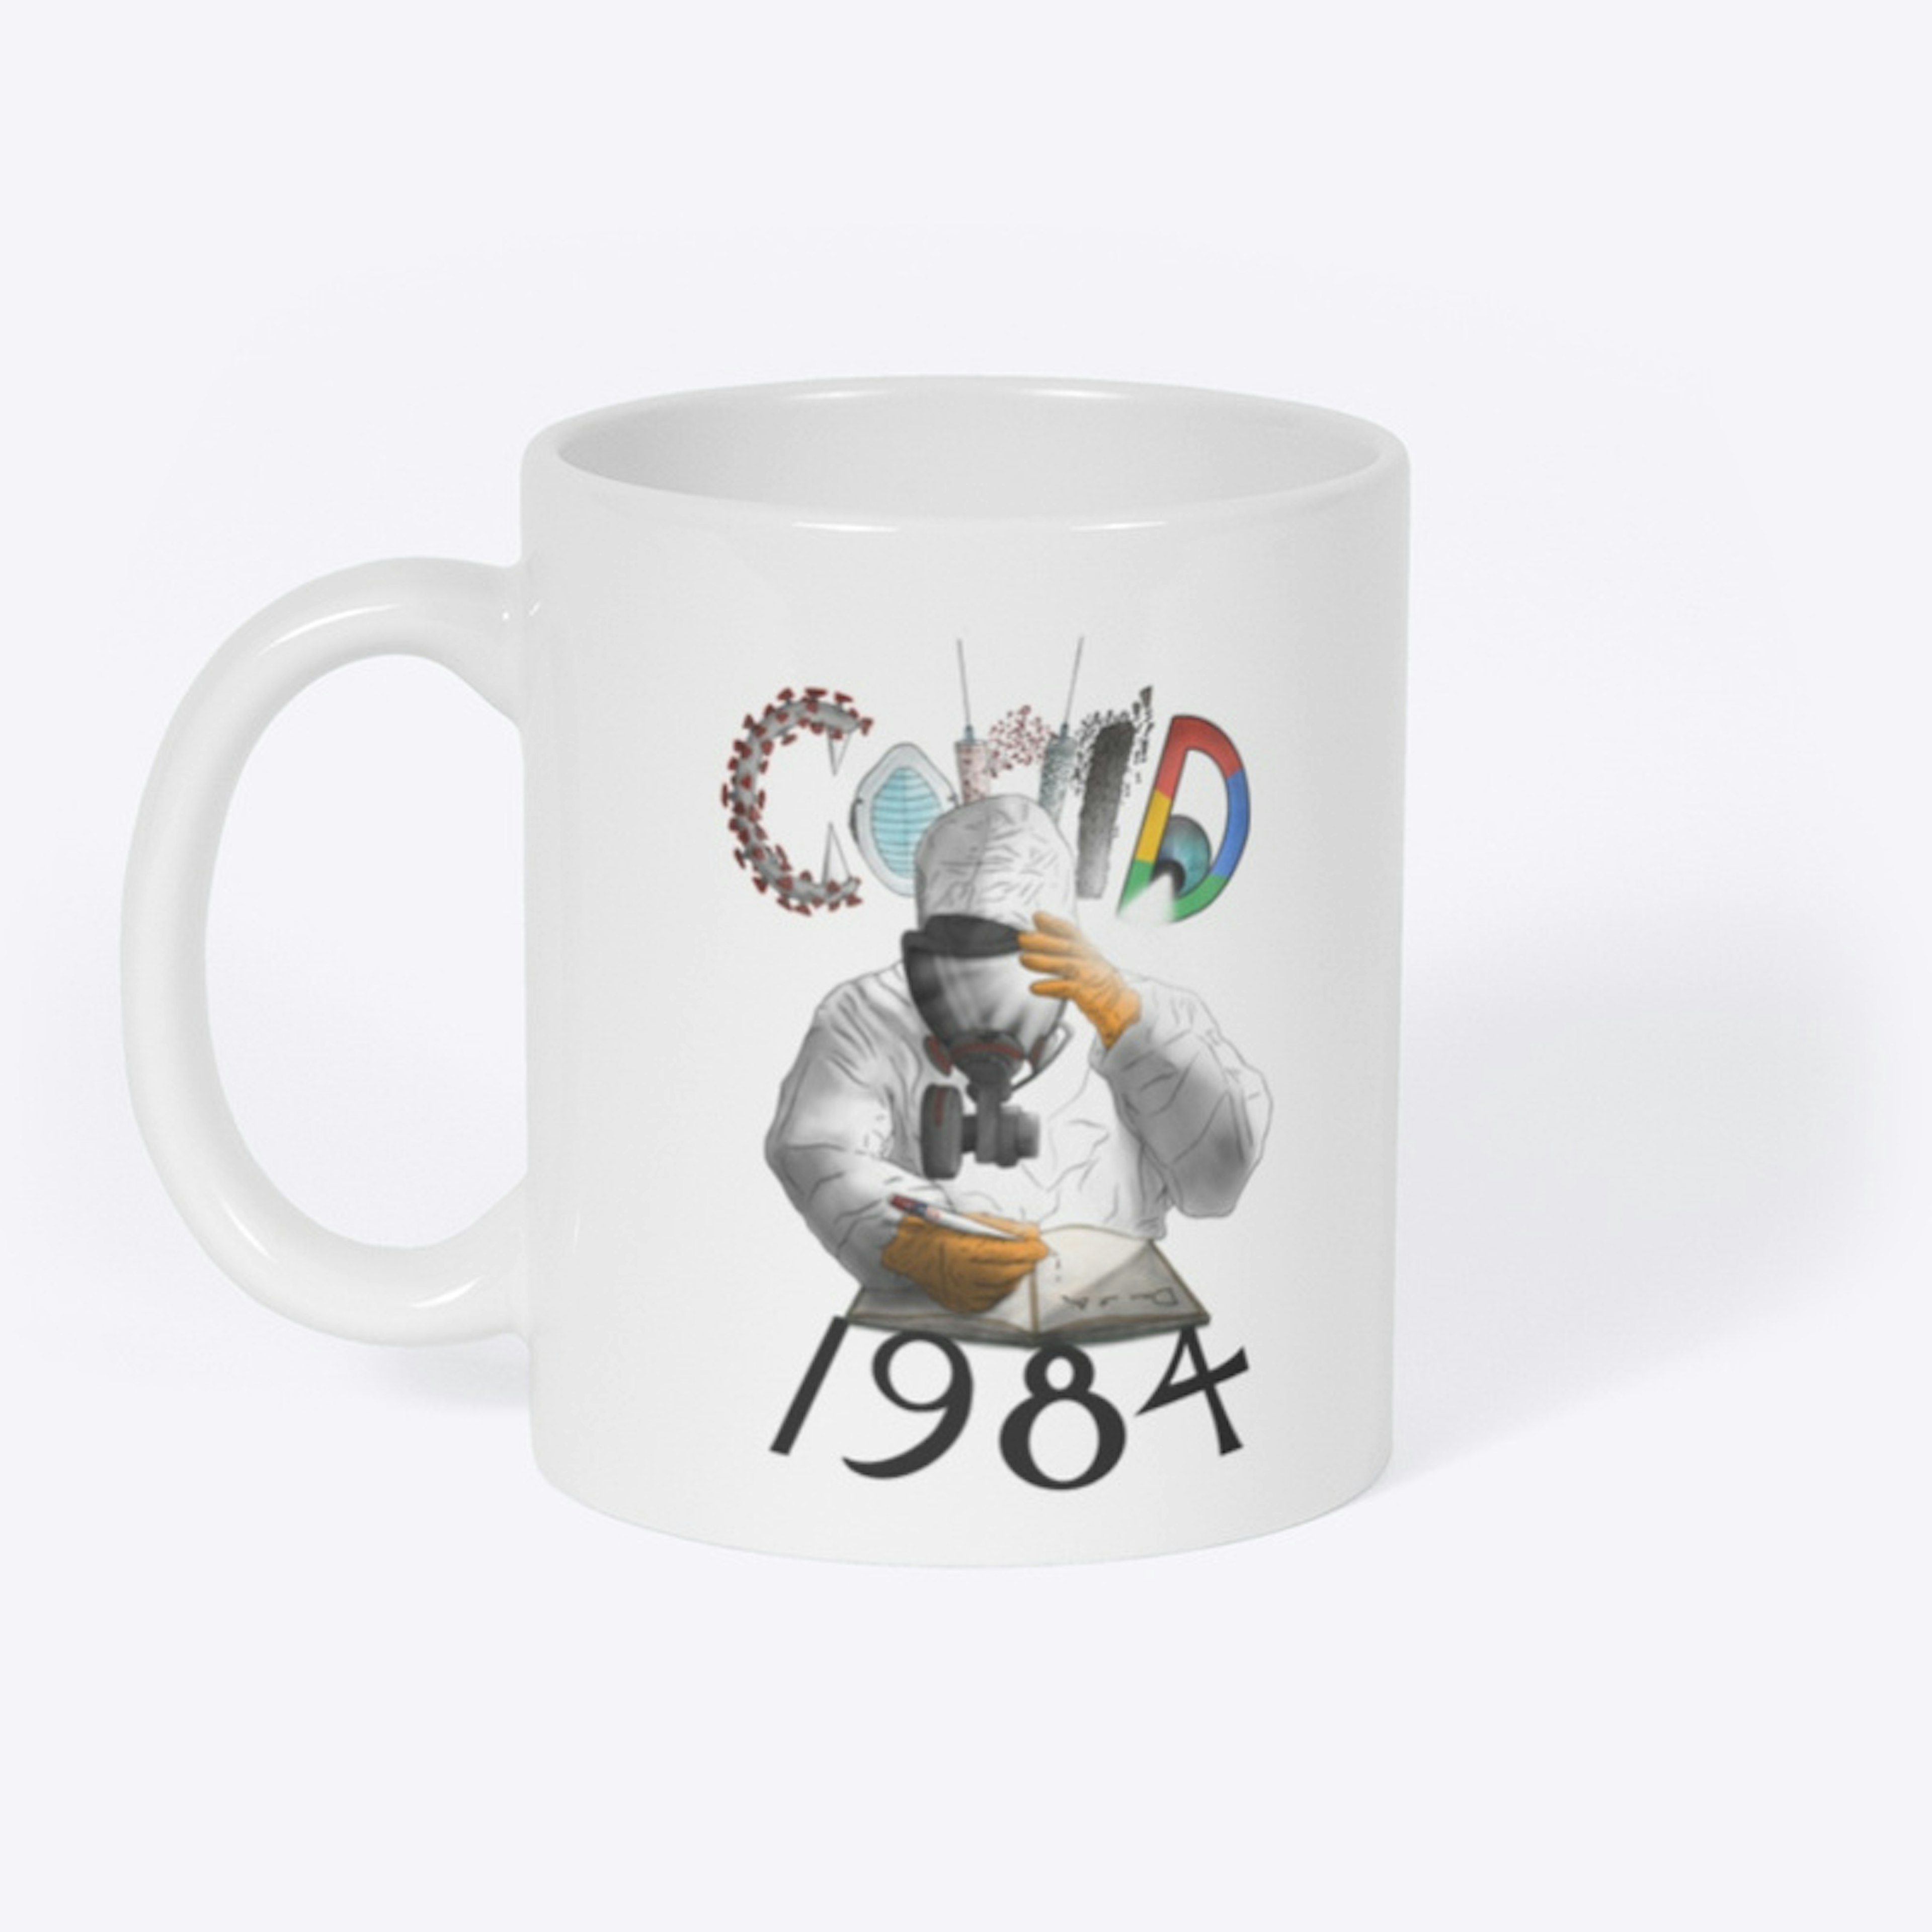 Covid 1984 Mug